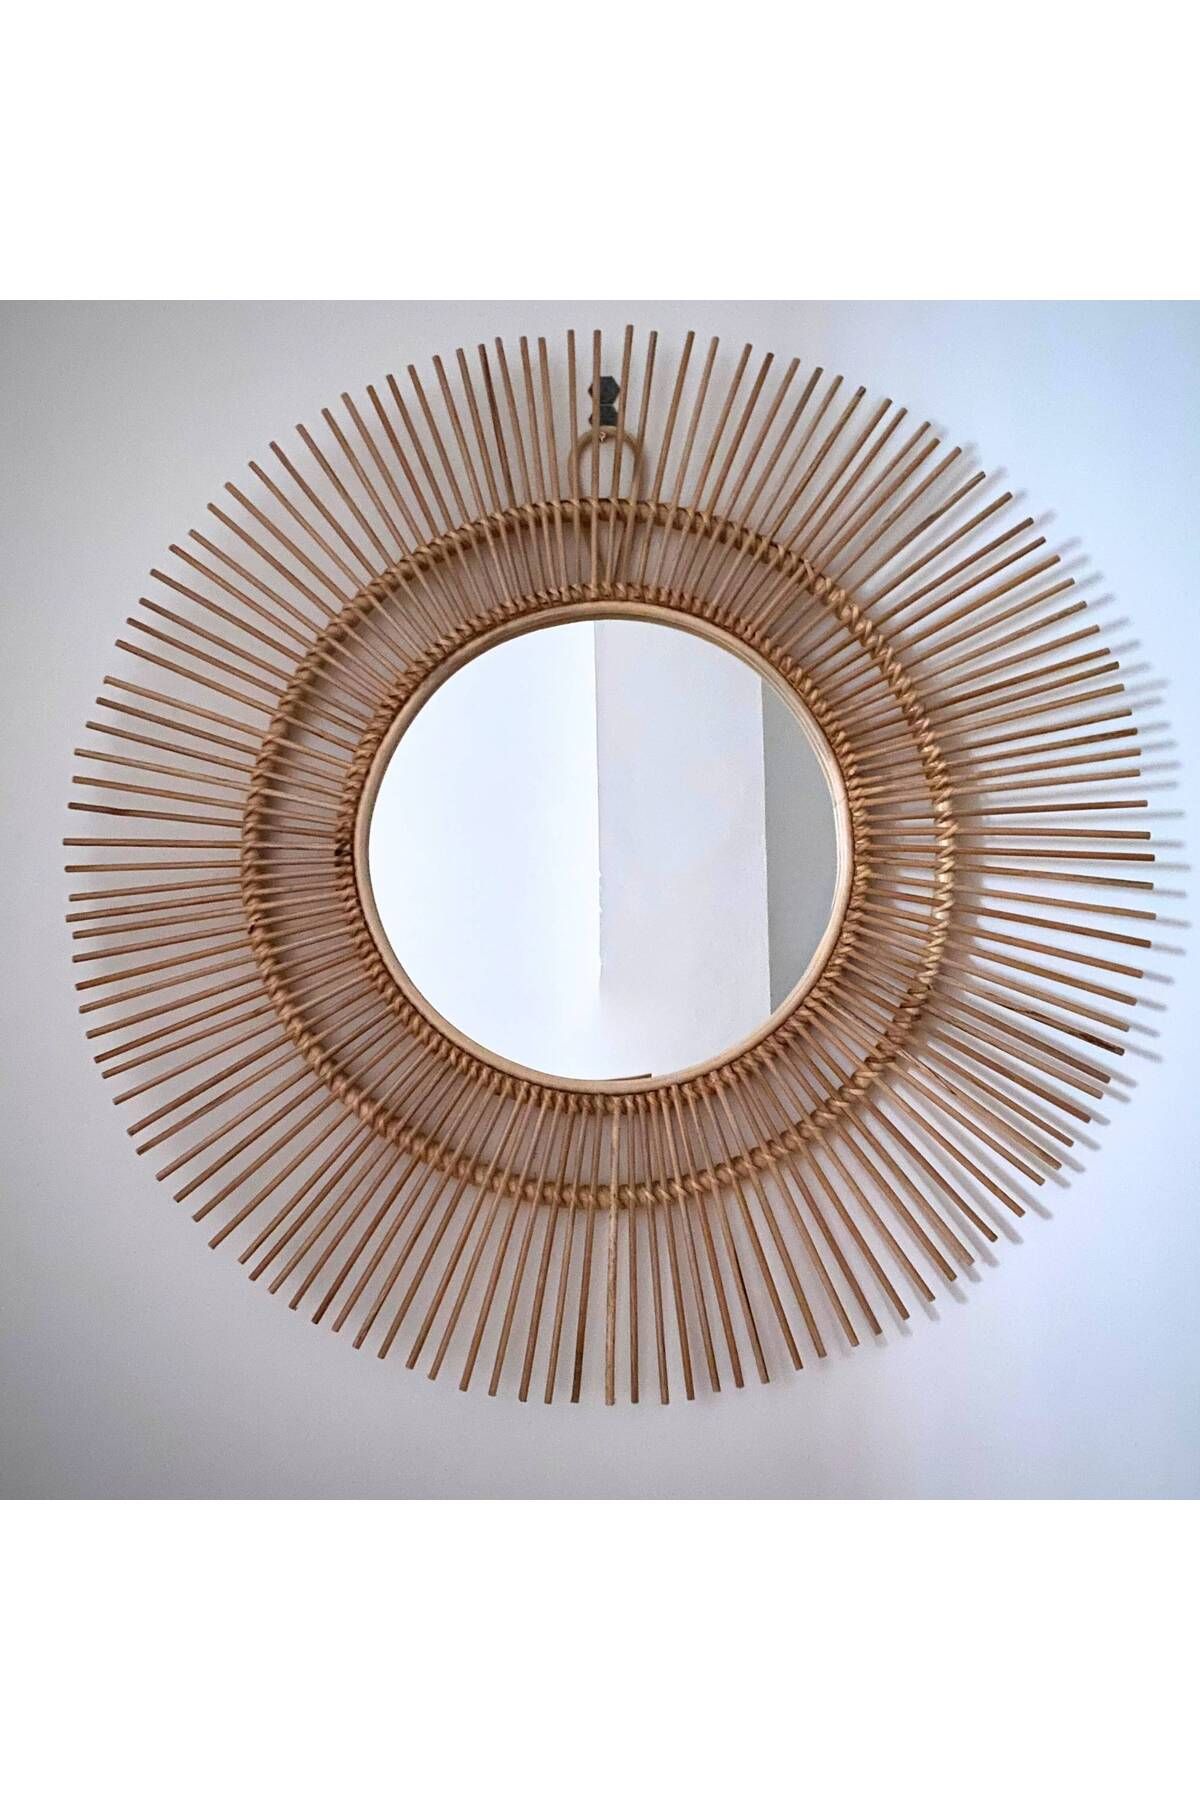 PESHCE El Yapımı Güneş Bambu Ayna 120 cm